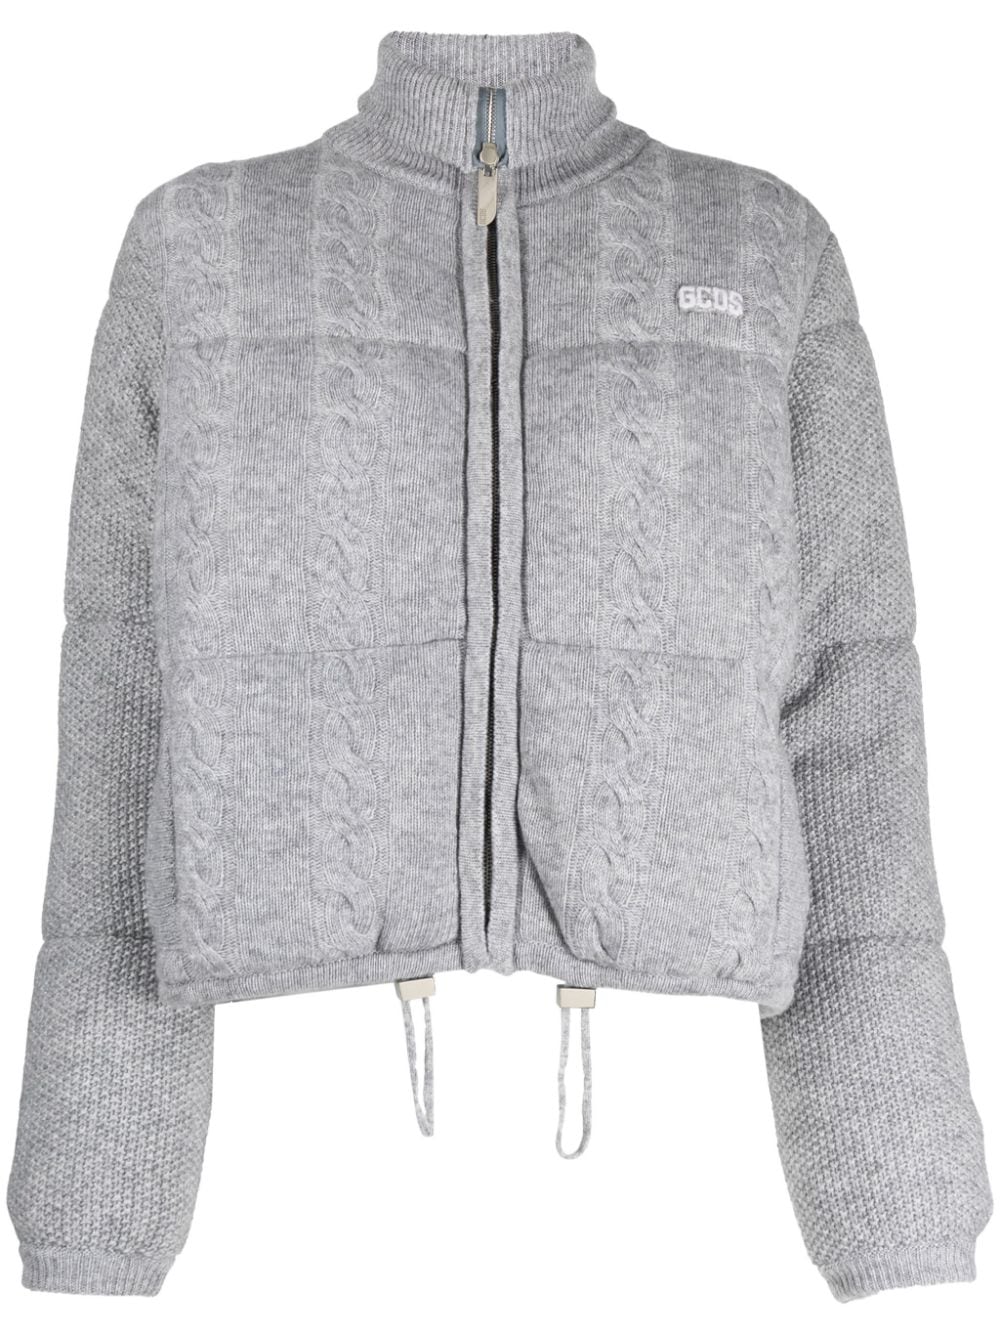 Gcds cable-knit zip-up bomber jacket - Grey von Gcds